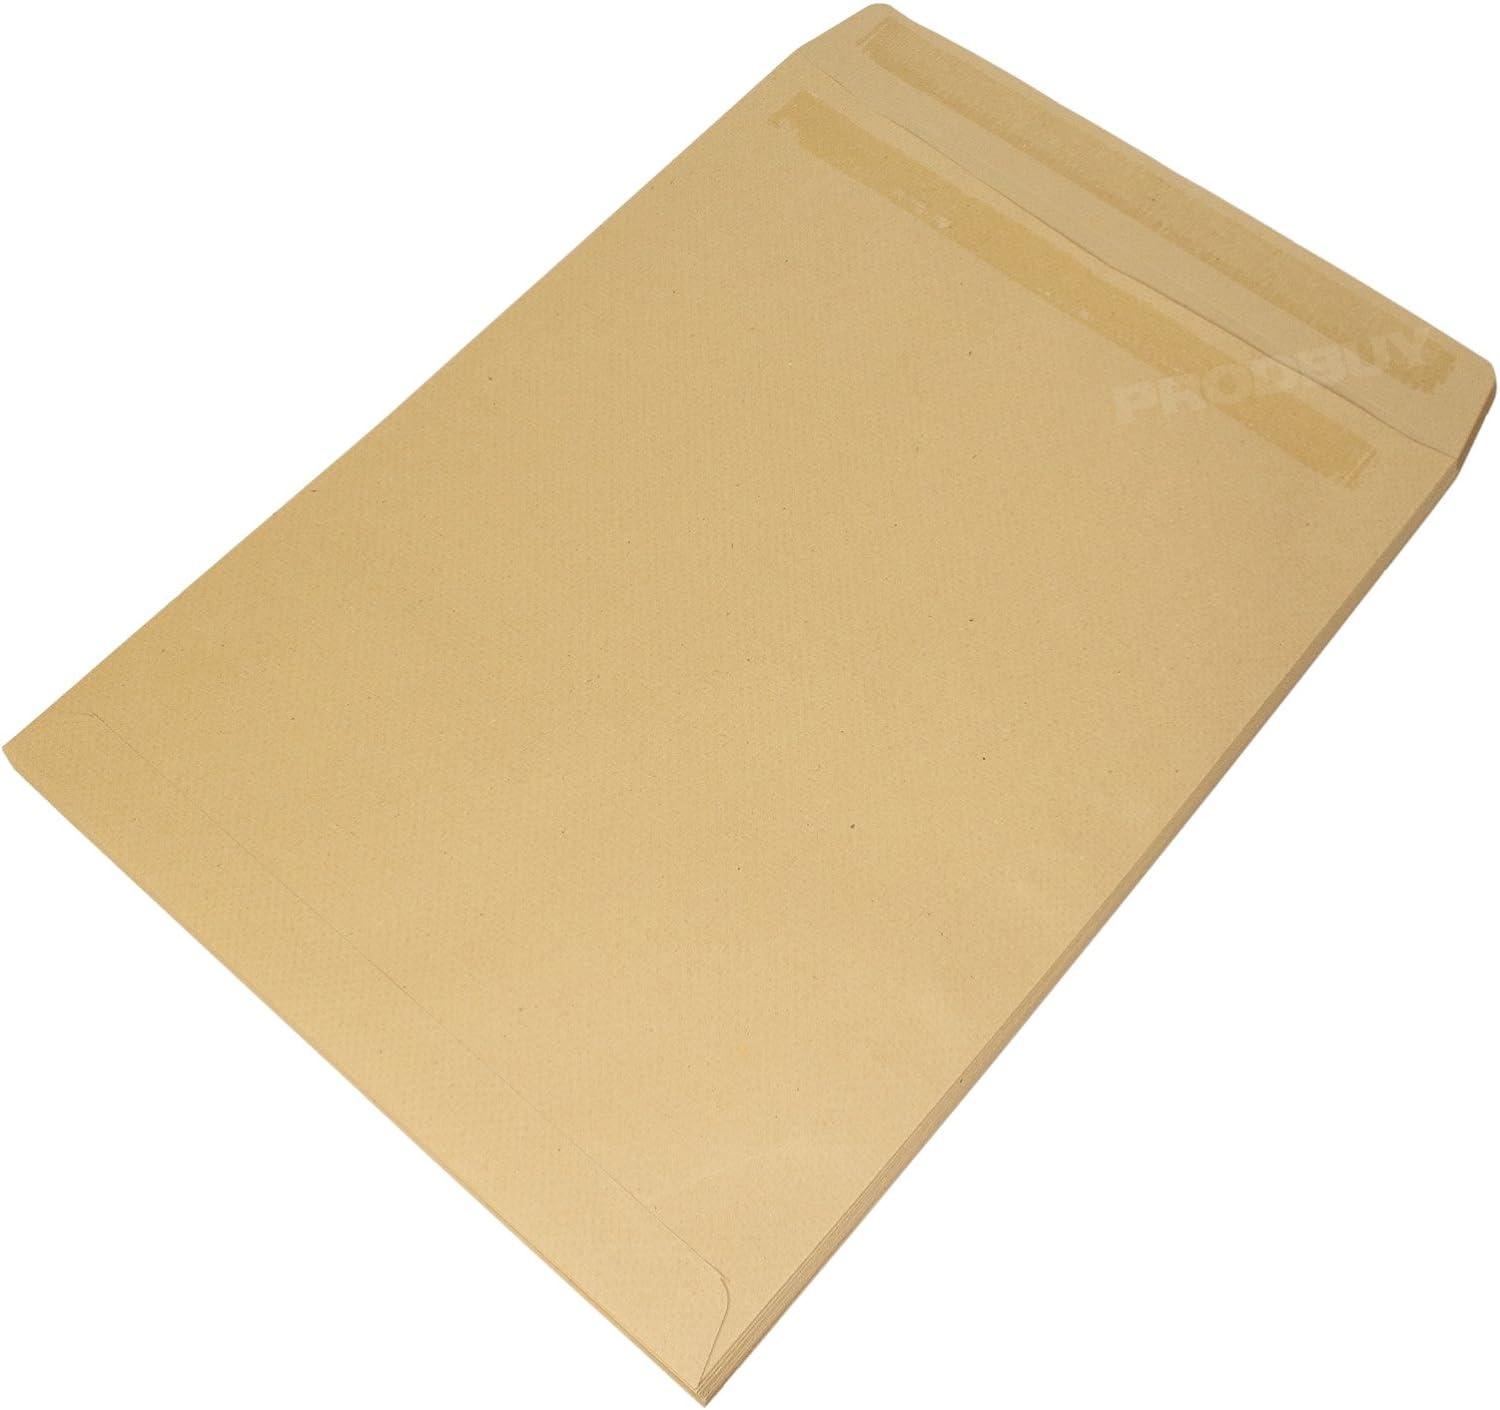 Envelopes 16x12" Manilla Plain Self Seal Large 408mm x 303mm Brown Envelope Pack